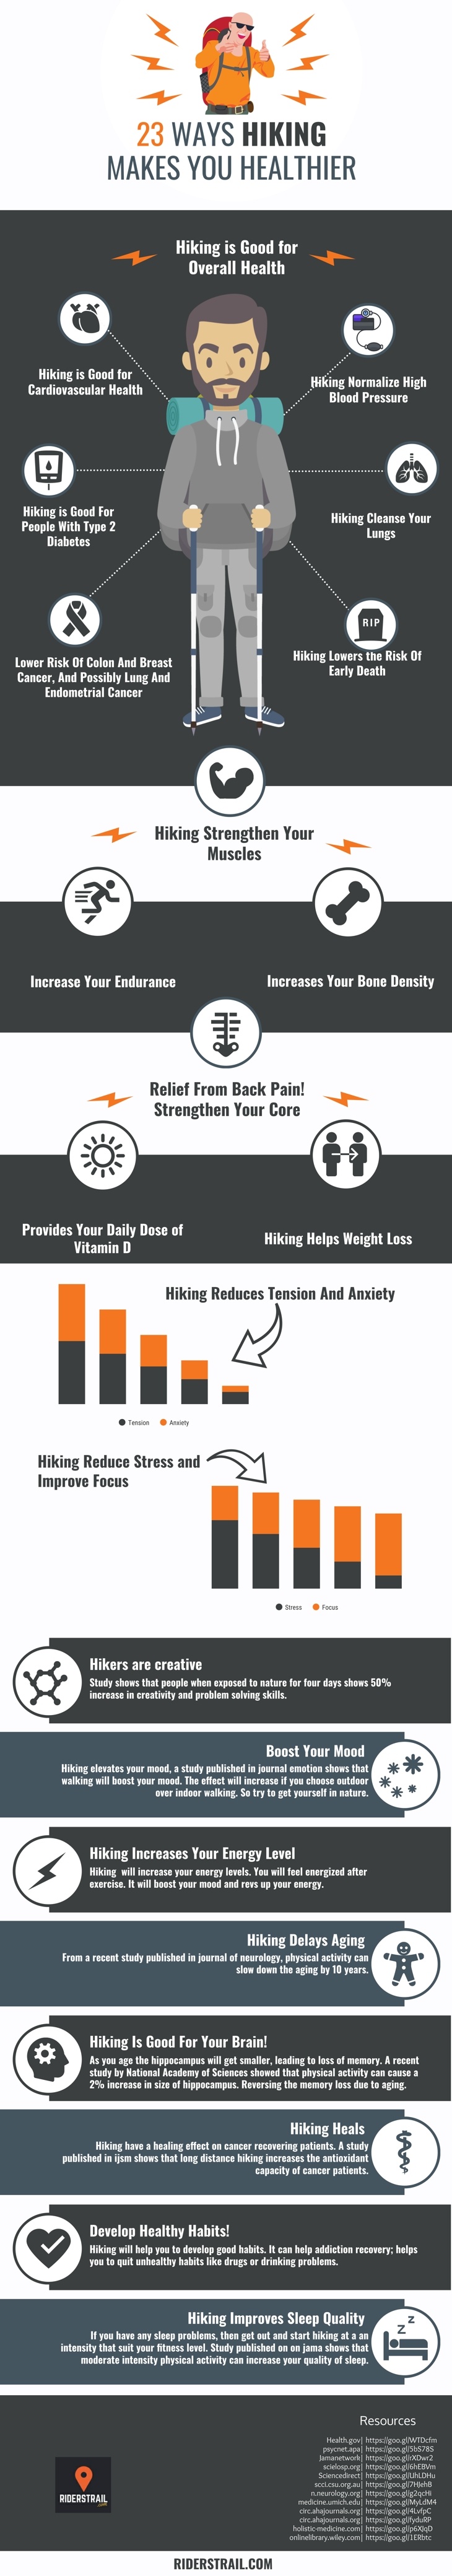 23 Ways Hiking Makes You Healthier